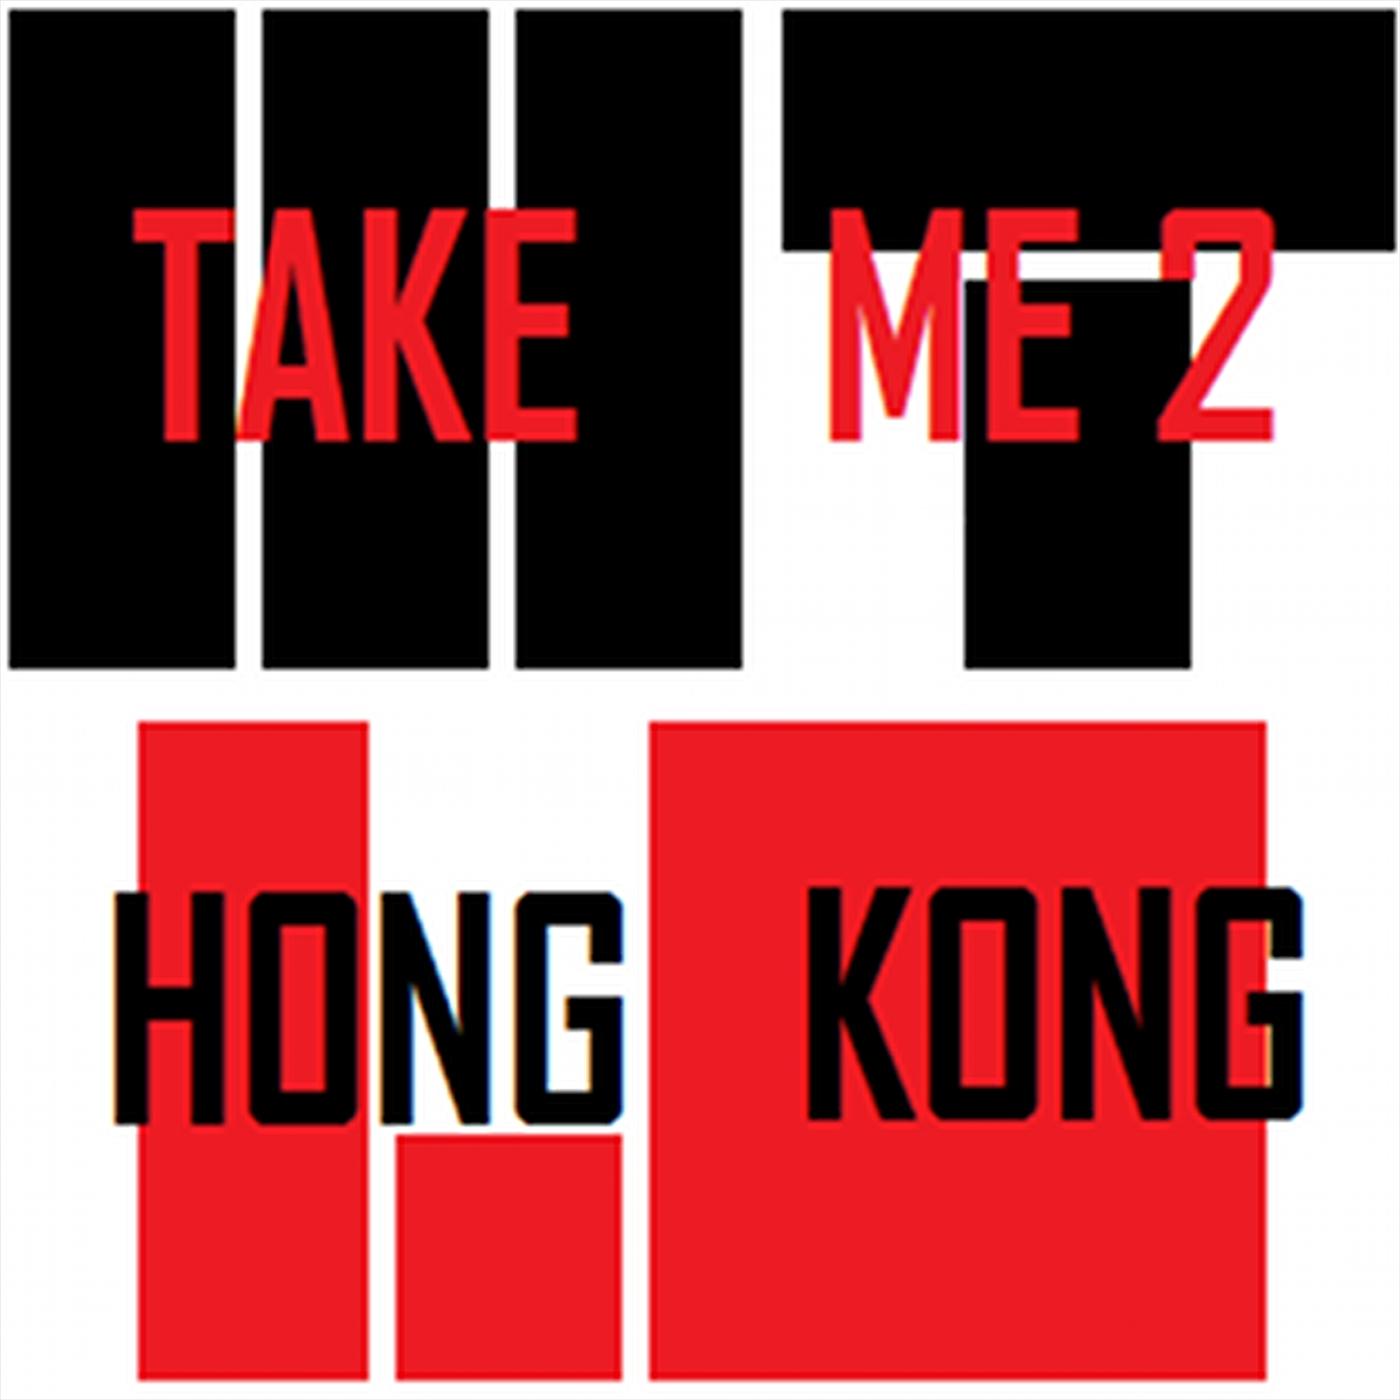 Take me to Hong Kong